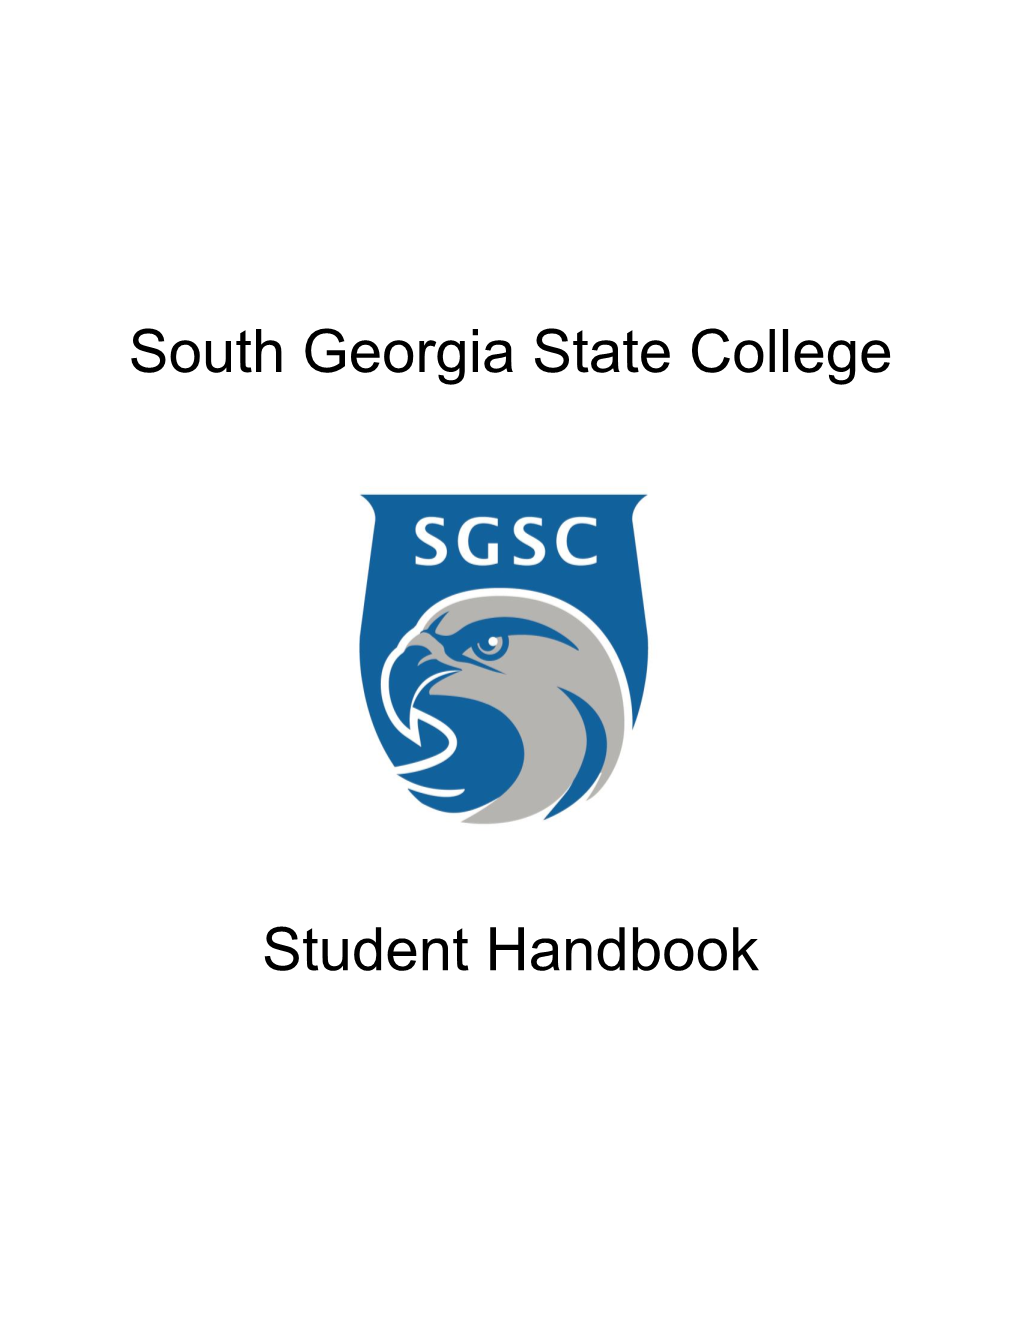 South Georgia State College Student Handbook